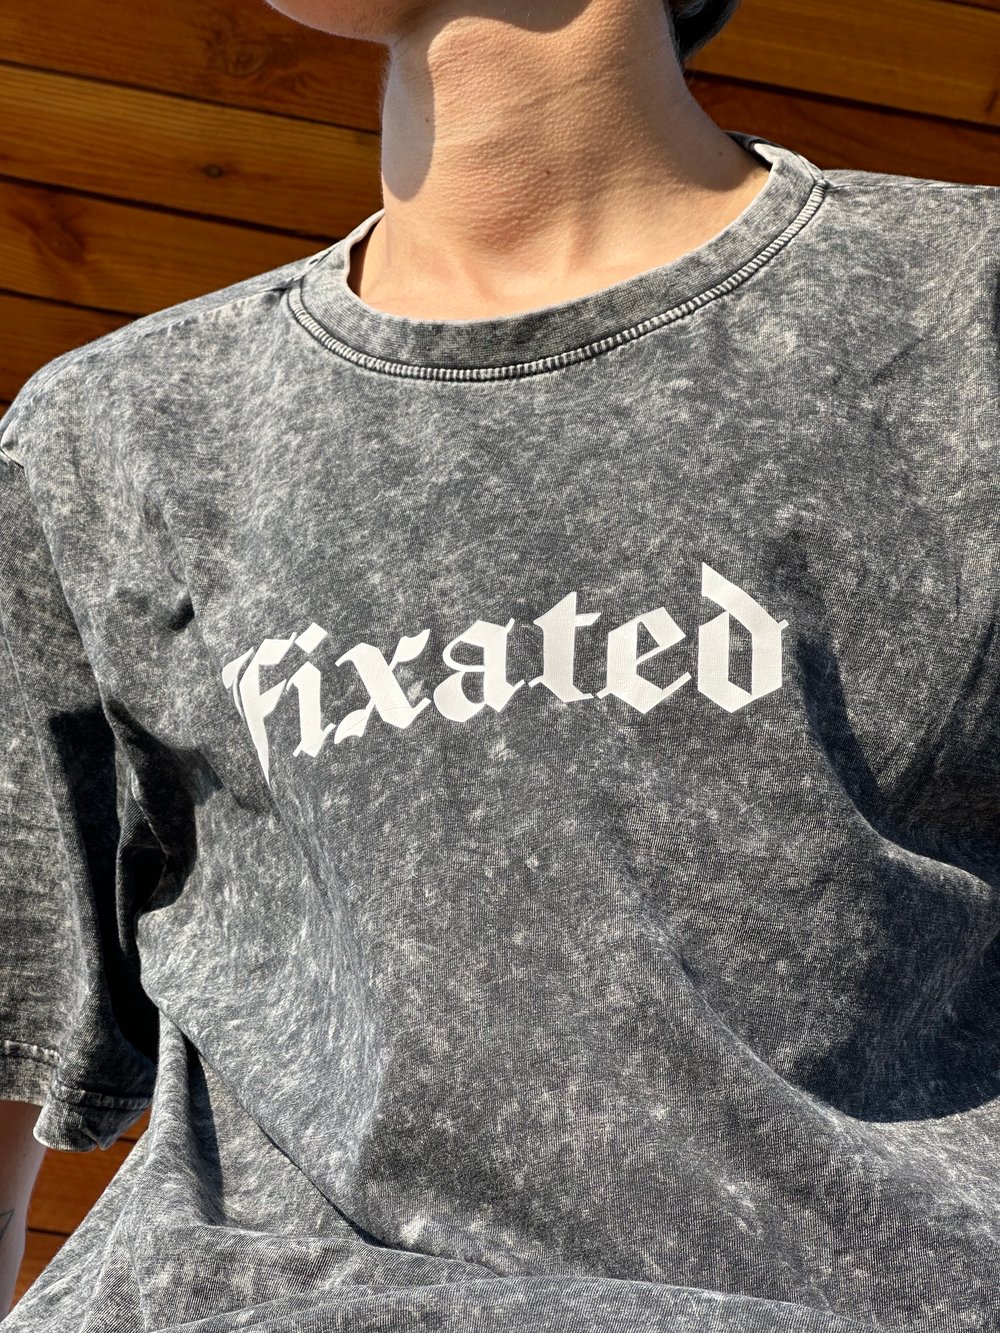 Fixated - Shirt